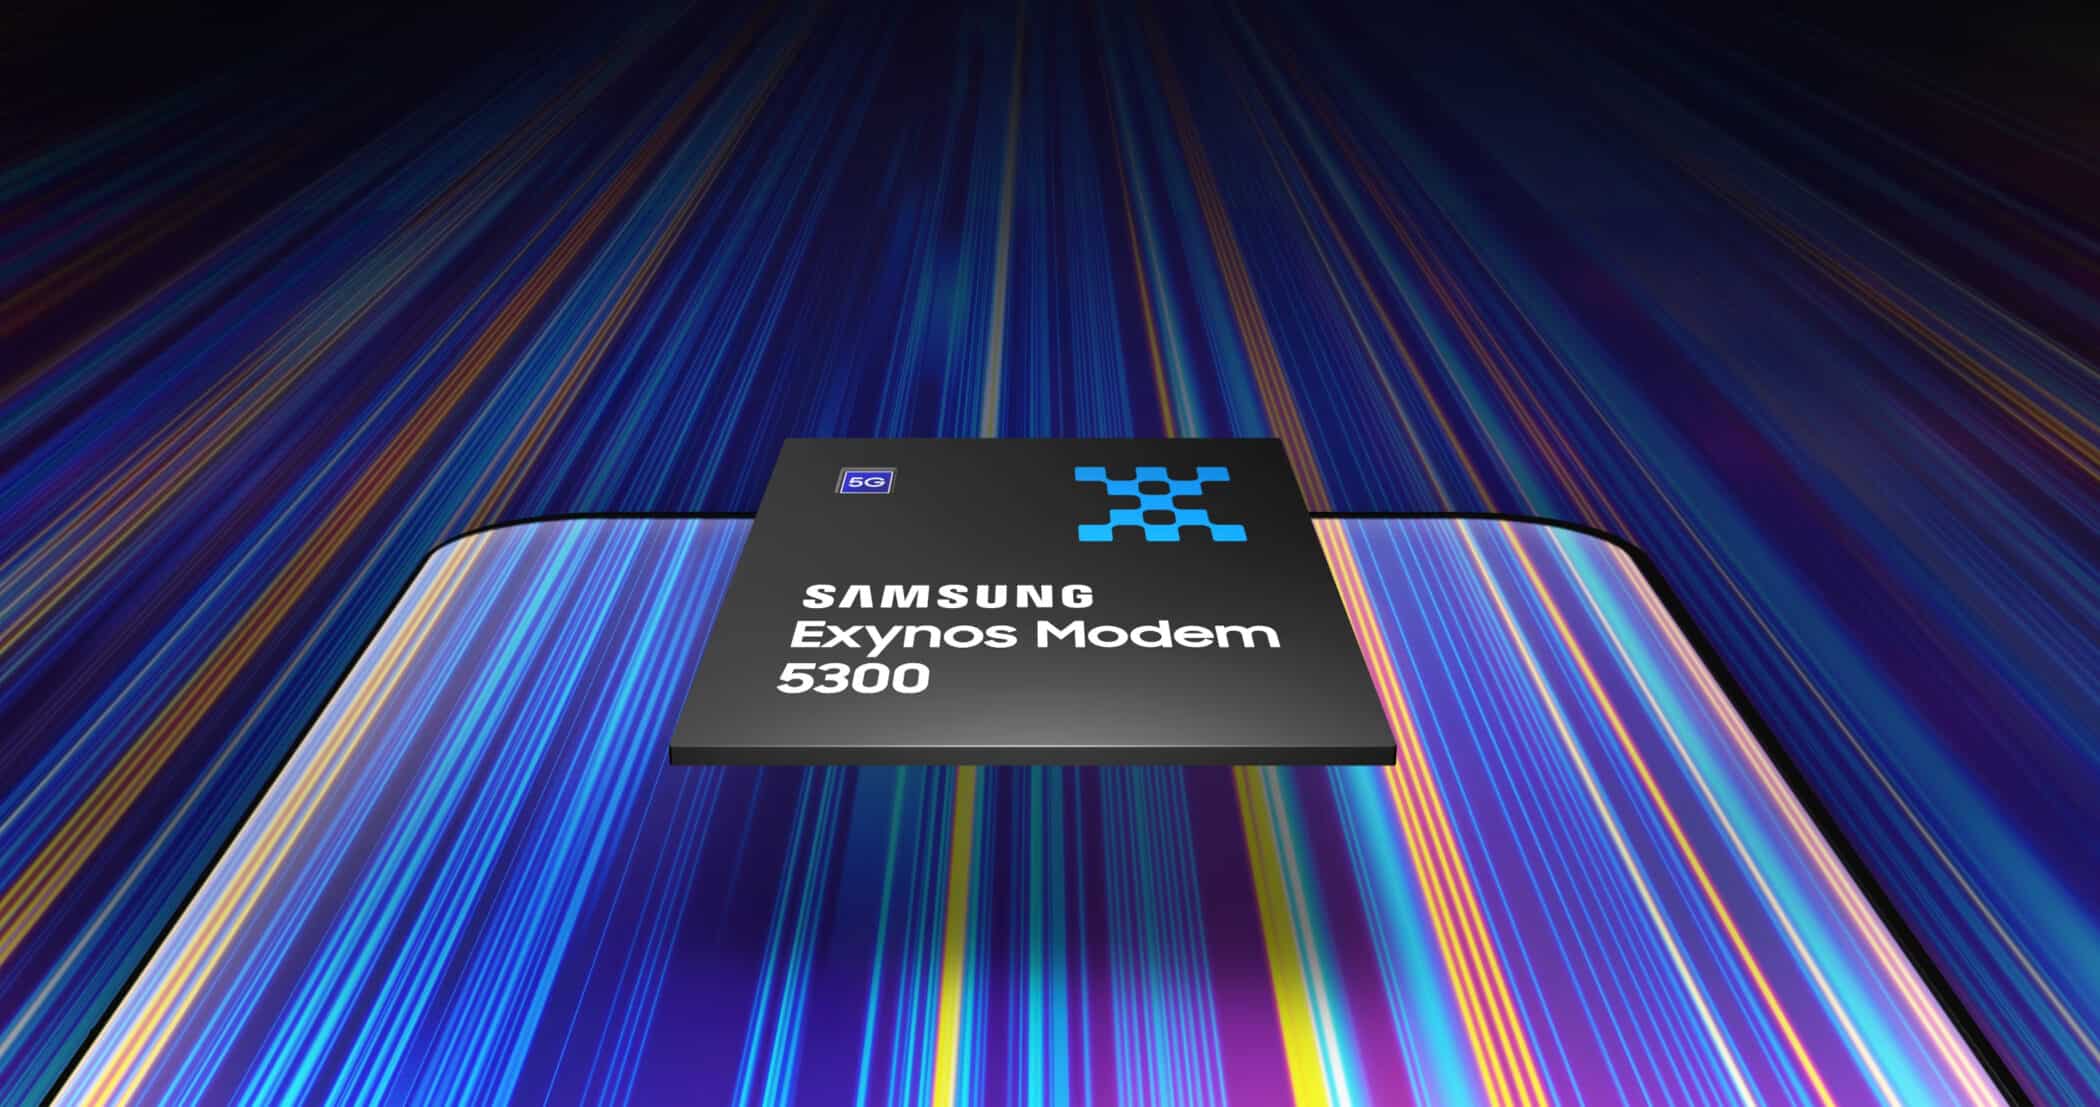 Samsung、最新5Gモデム「Exynos Modem 5300」を発表